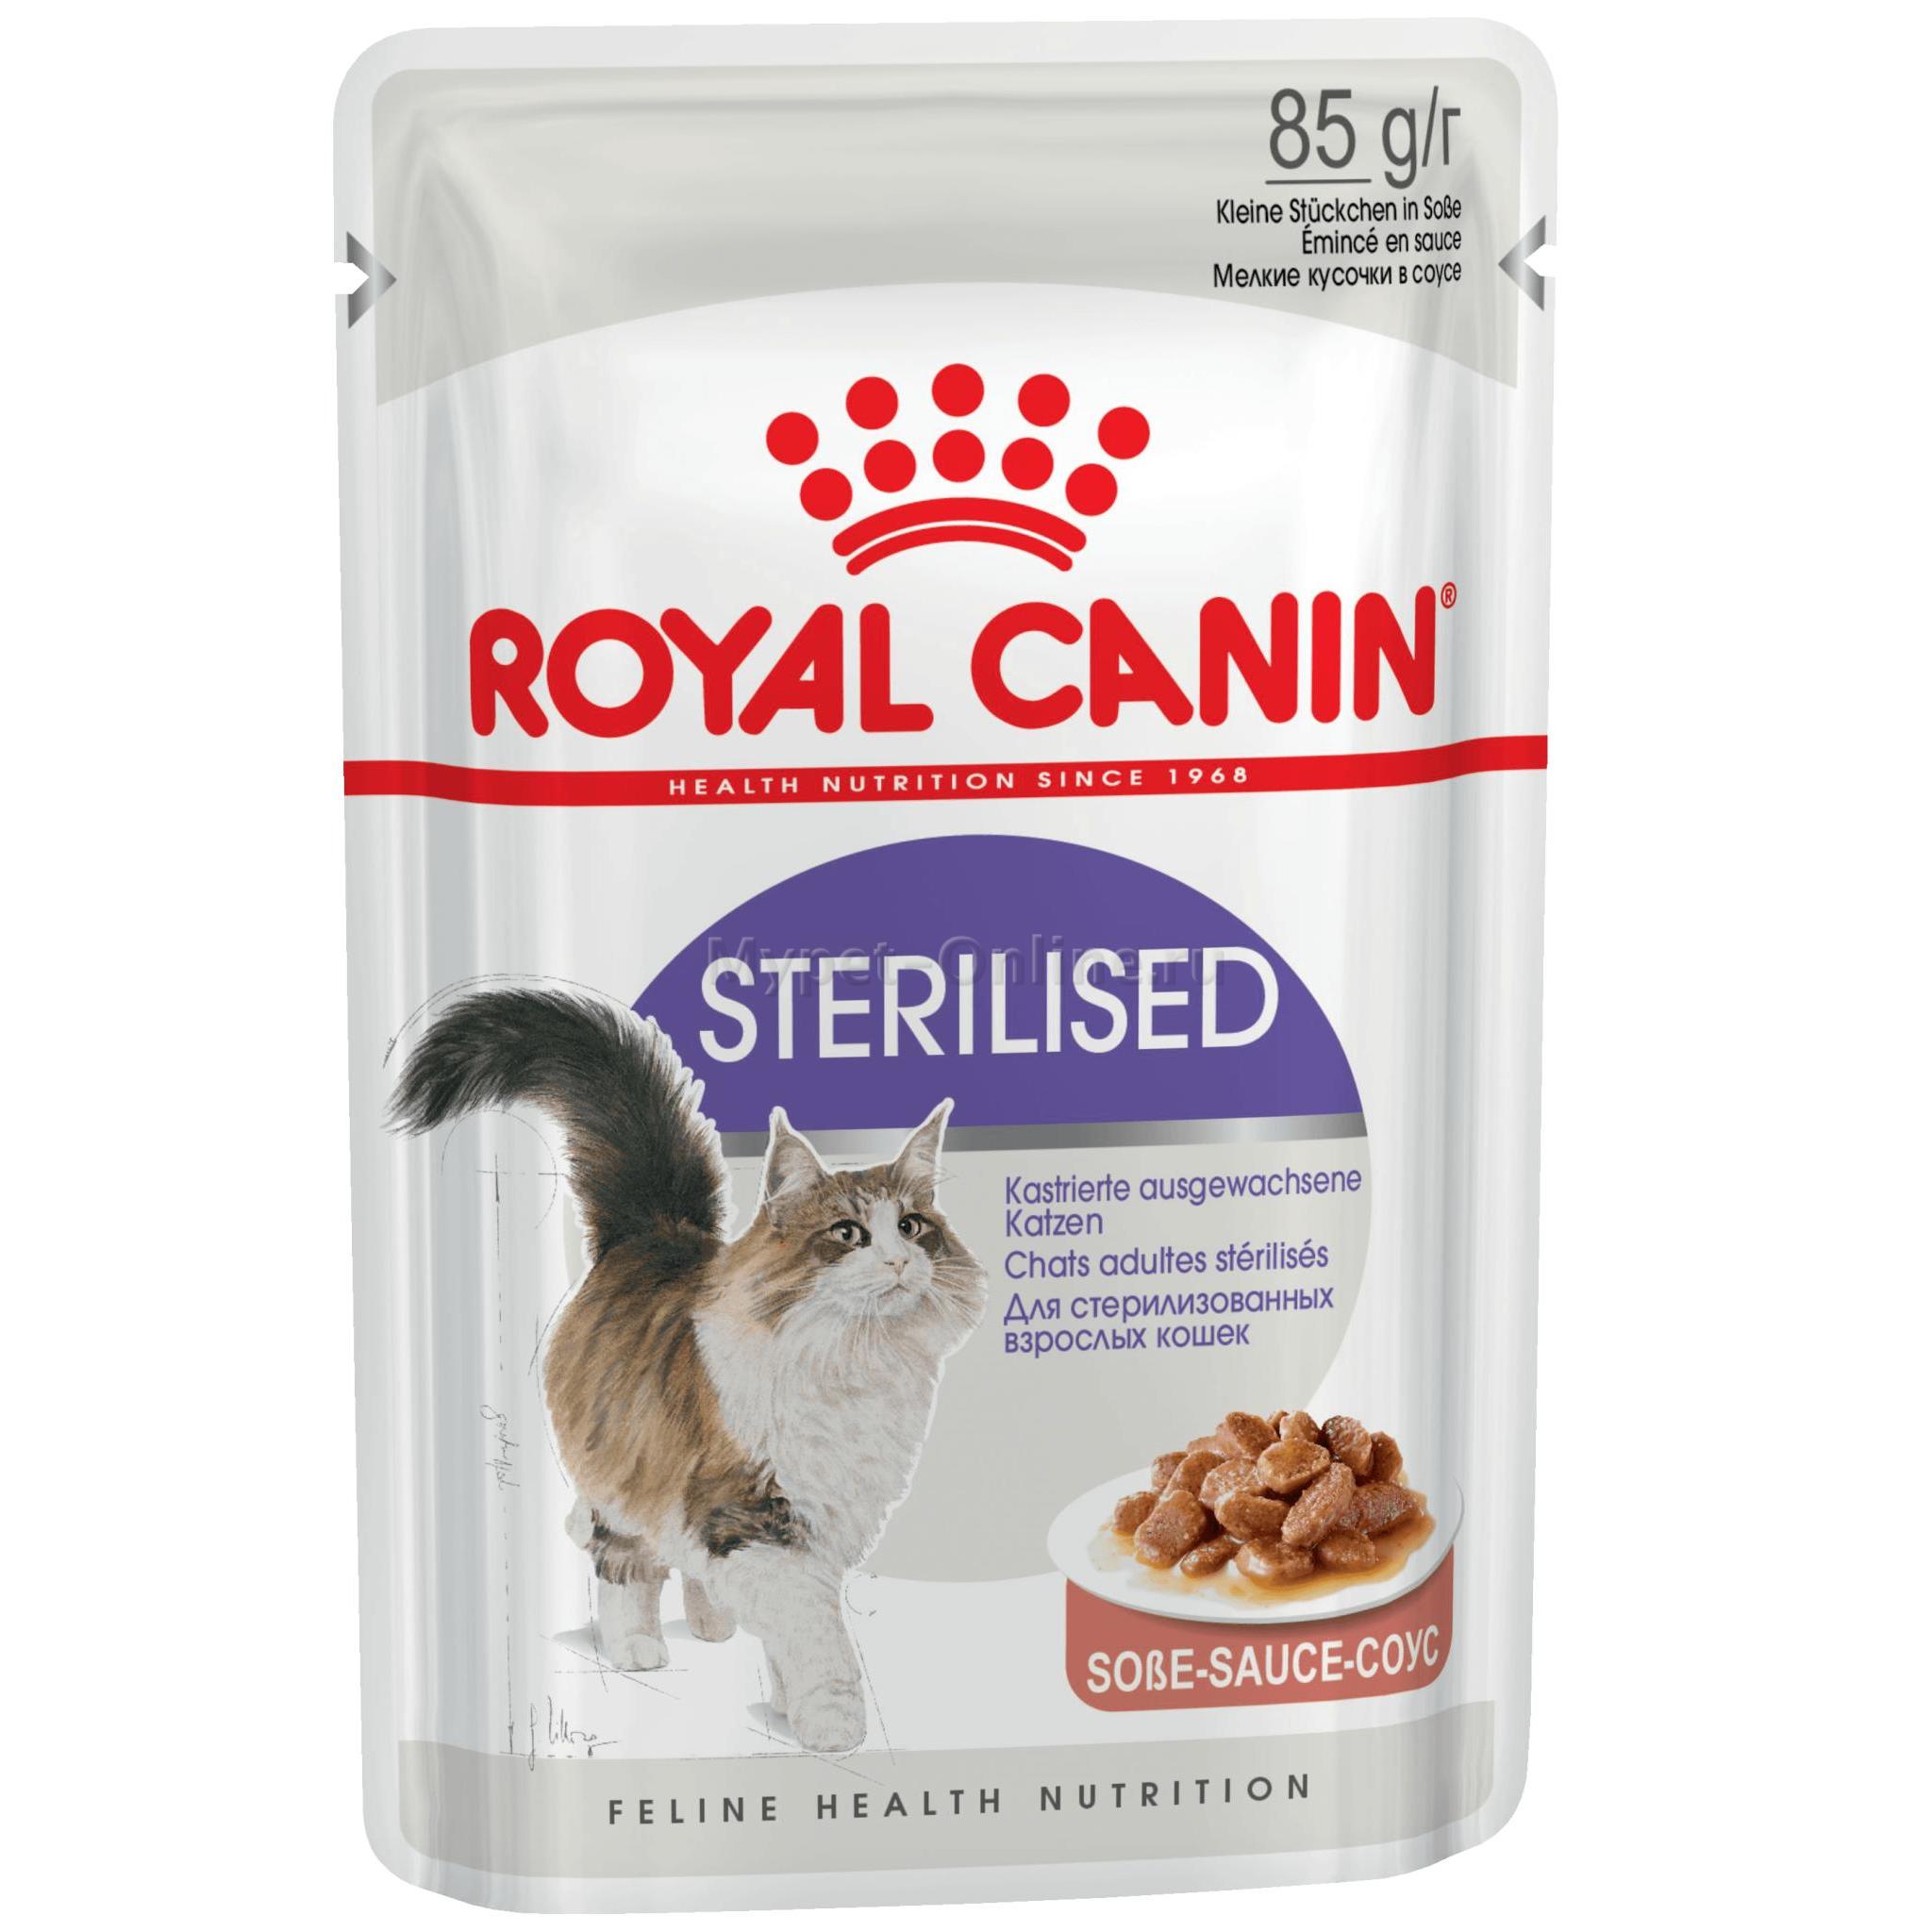 Royal Canin Sterilised соус. Royal Canin Kitten пауч для котят в соусе 85 гр. Royal Canin Sterilised паучи в желе. Royal Canin Kitten Instinctive влажный корм. Желе для стерилизованных кошек